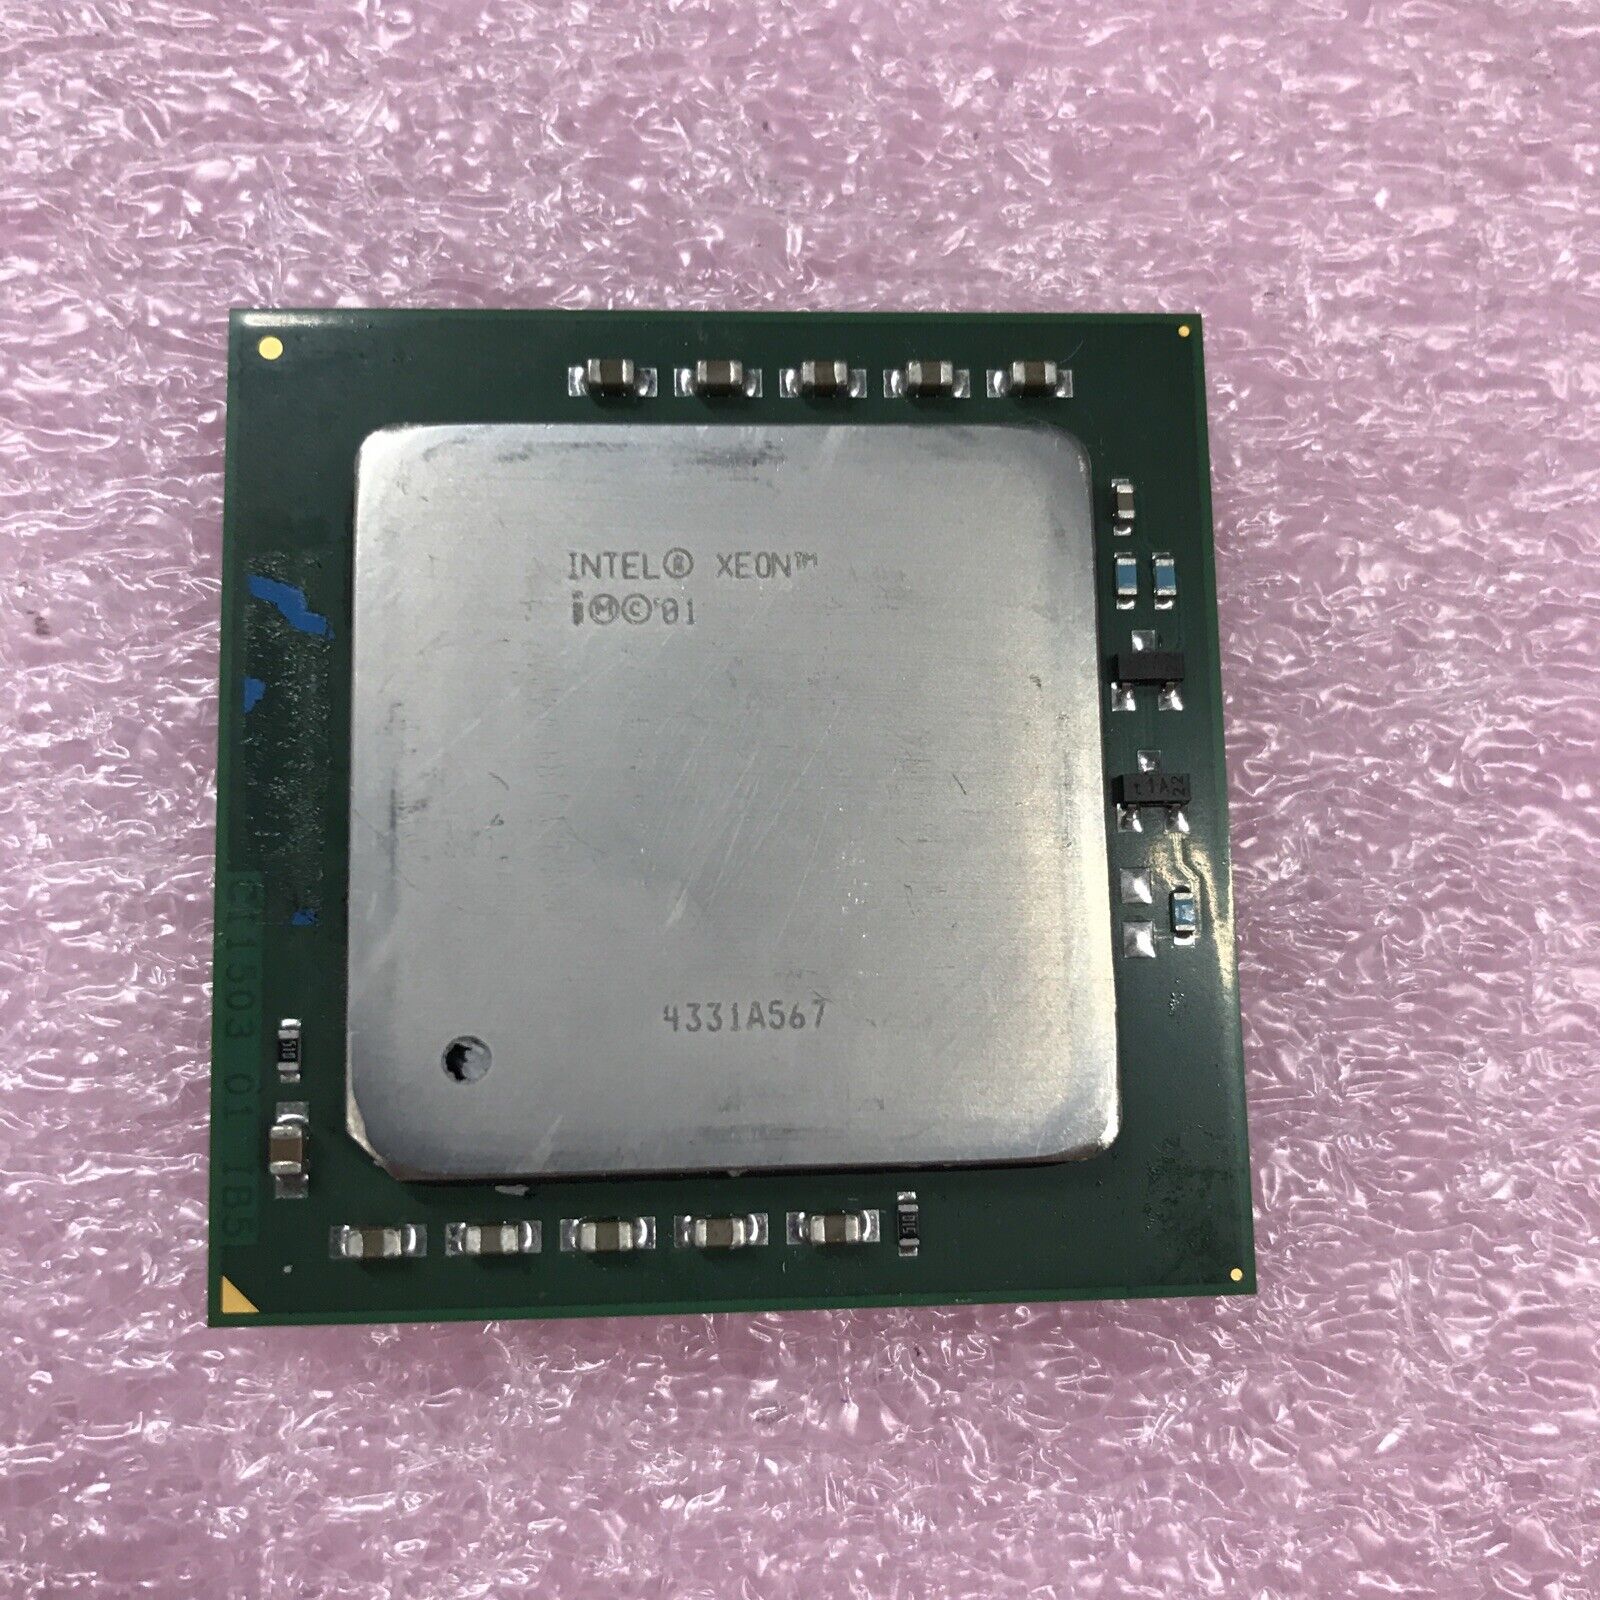 (Lot of 4) Intel SL6VL Server Xeon Processor Dell Poweredge 2600 3331A379-0303